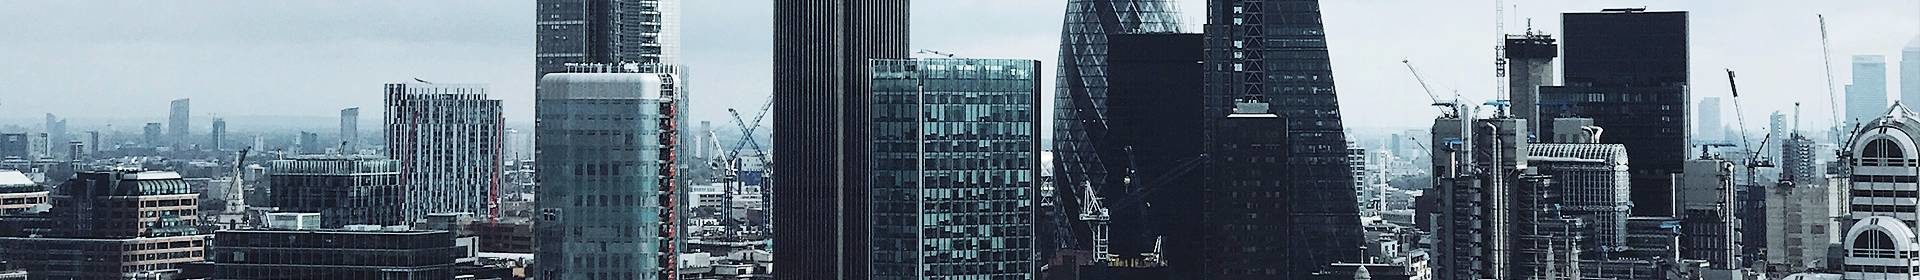 Business buildings in UK